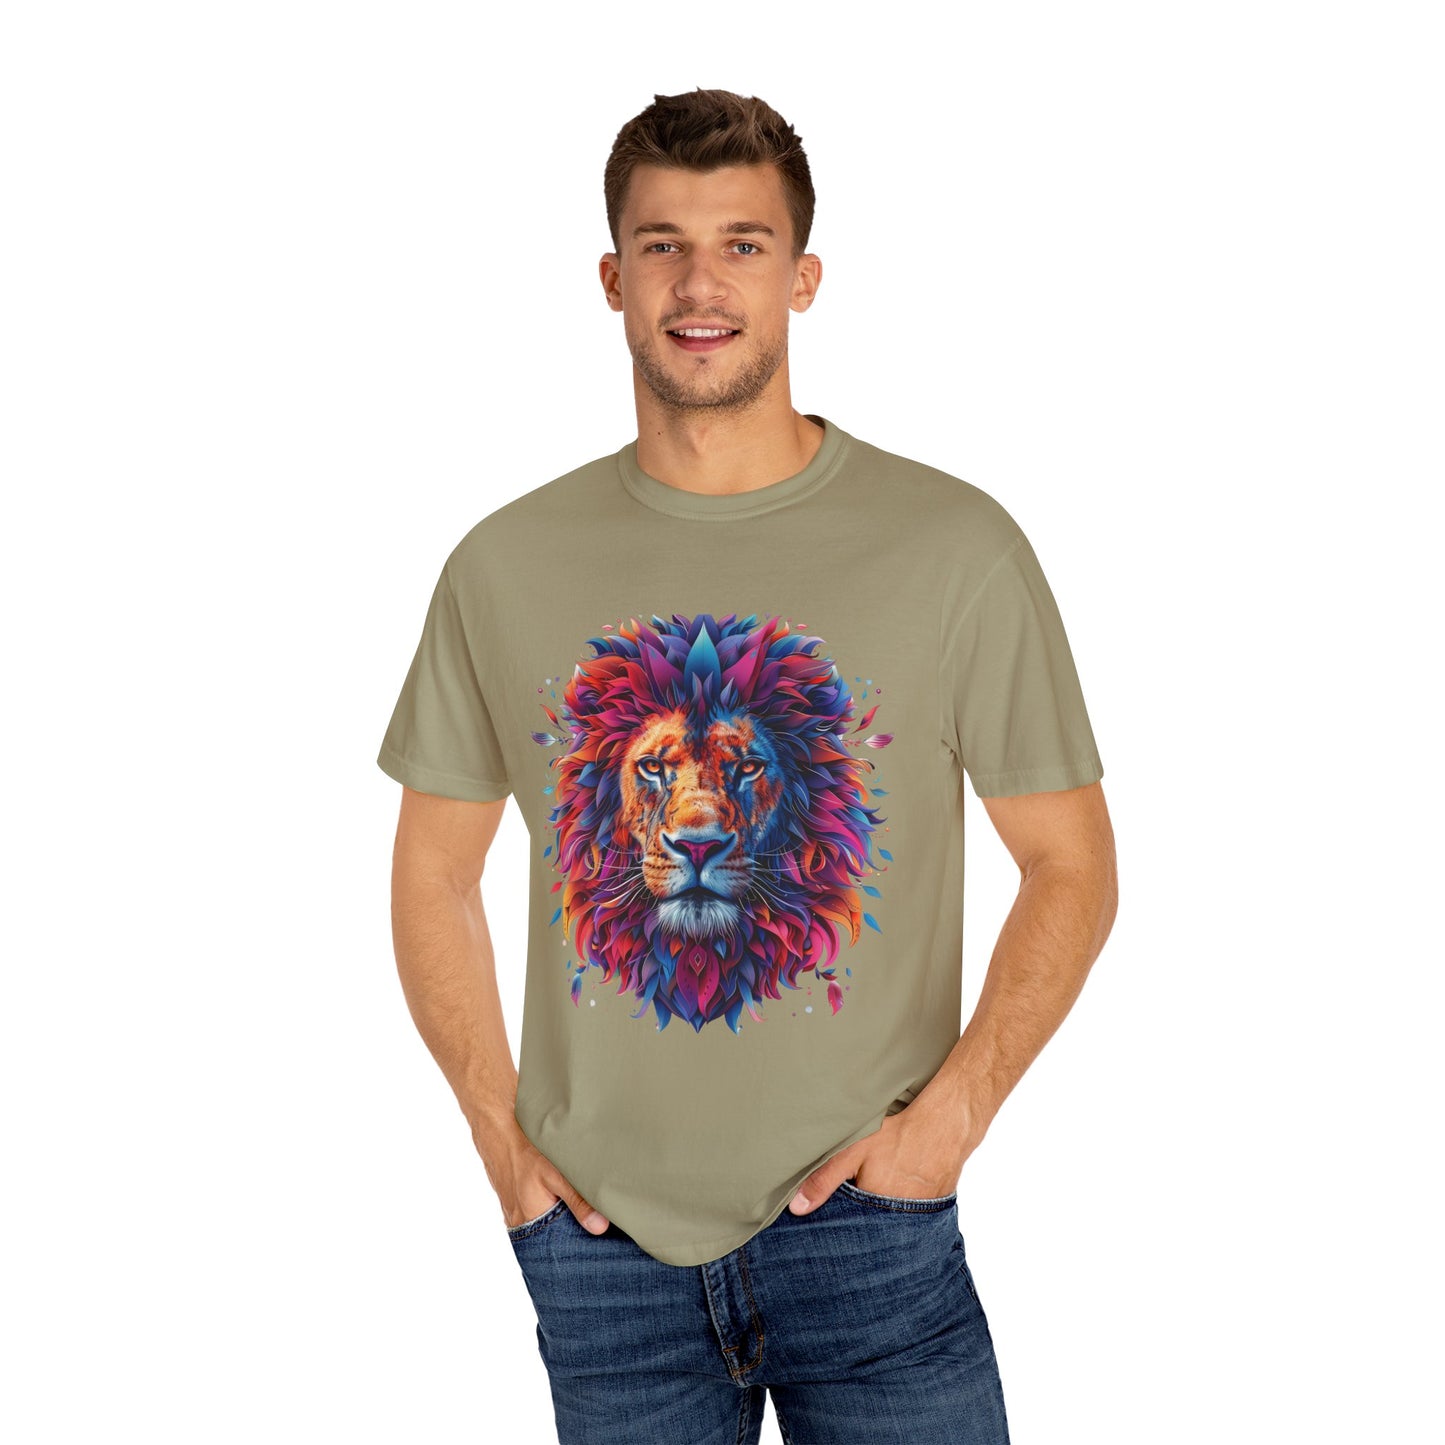 Lion Head Cool Graphic Design Novelty Unisex Garment-dyed T-shirt Cotton Funny Humorous Graphic Soft Premium Unisex Men Women Khaki T-shirt Birthday Gift-48